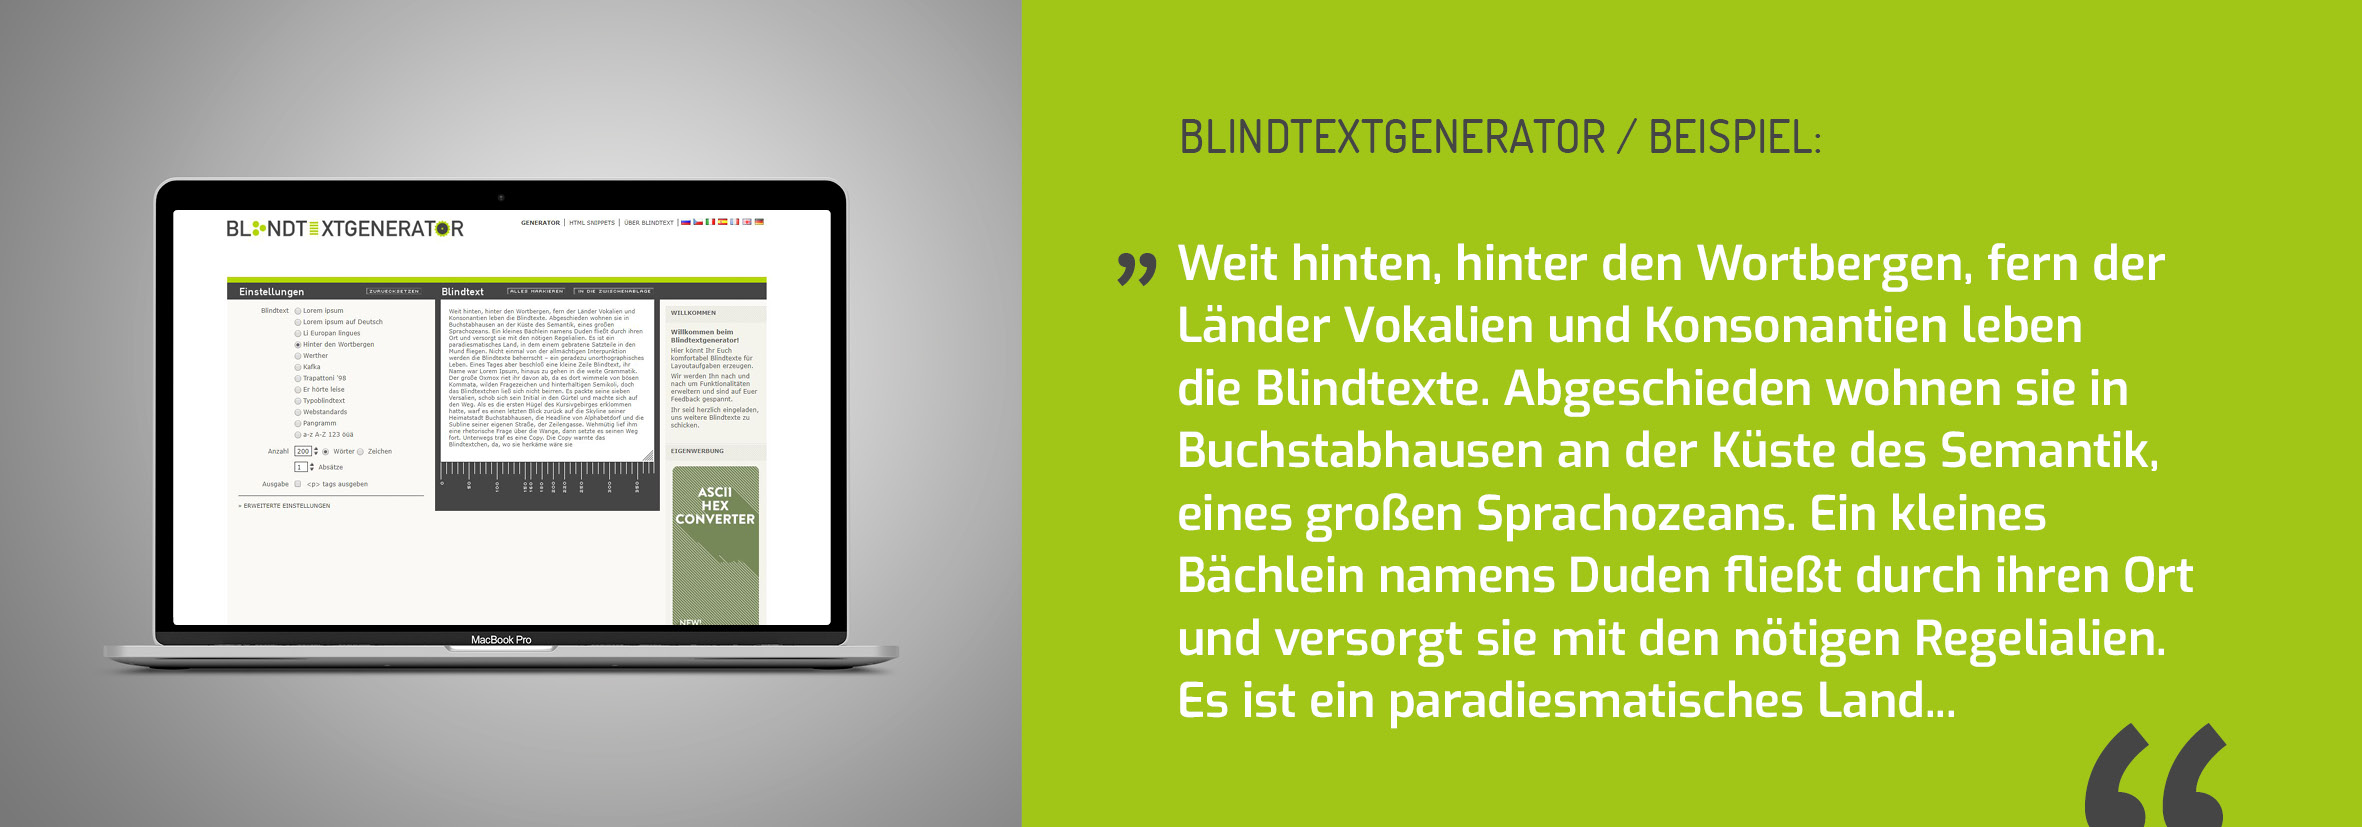 Blindtexte - Blindtext-Generator